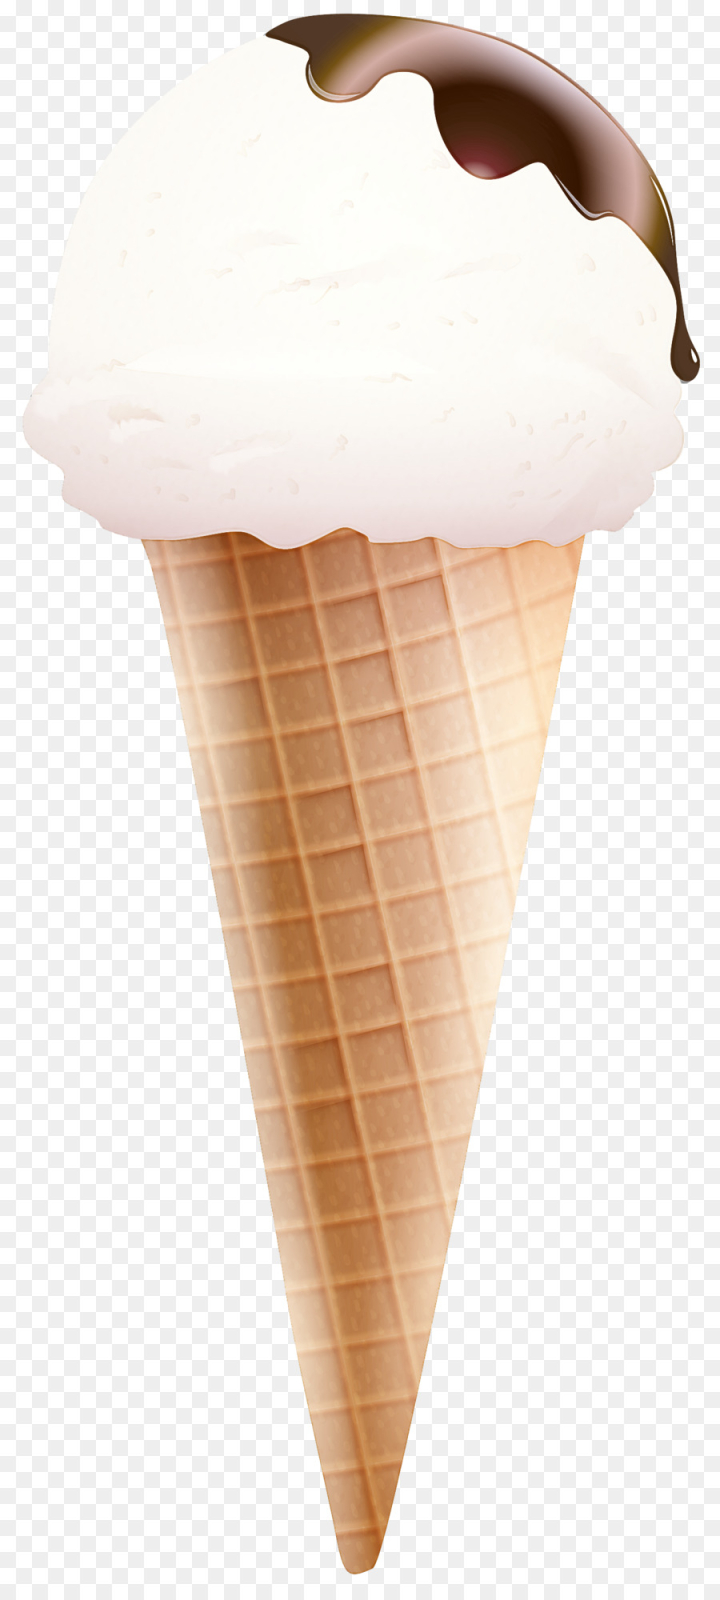 frozen dessert,ice cream cone,ice cream,food,dessert,dairy,gelato,cream,chocolate ice cream,cone,png